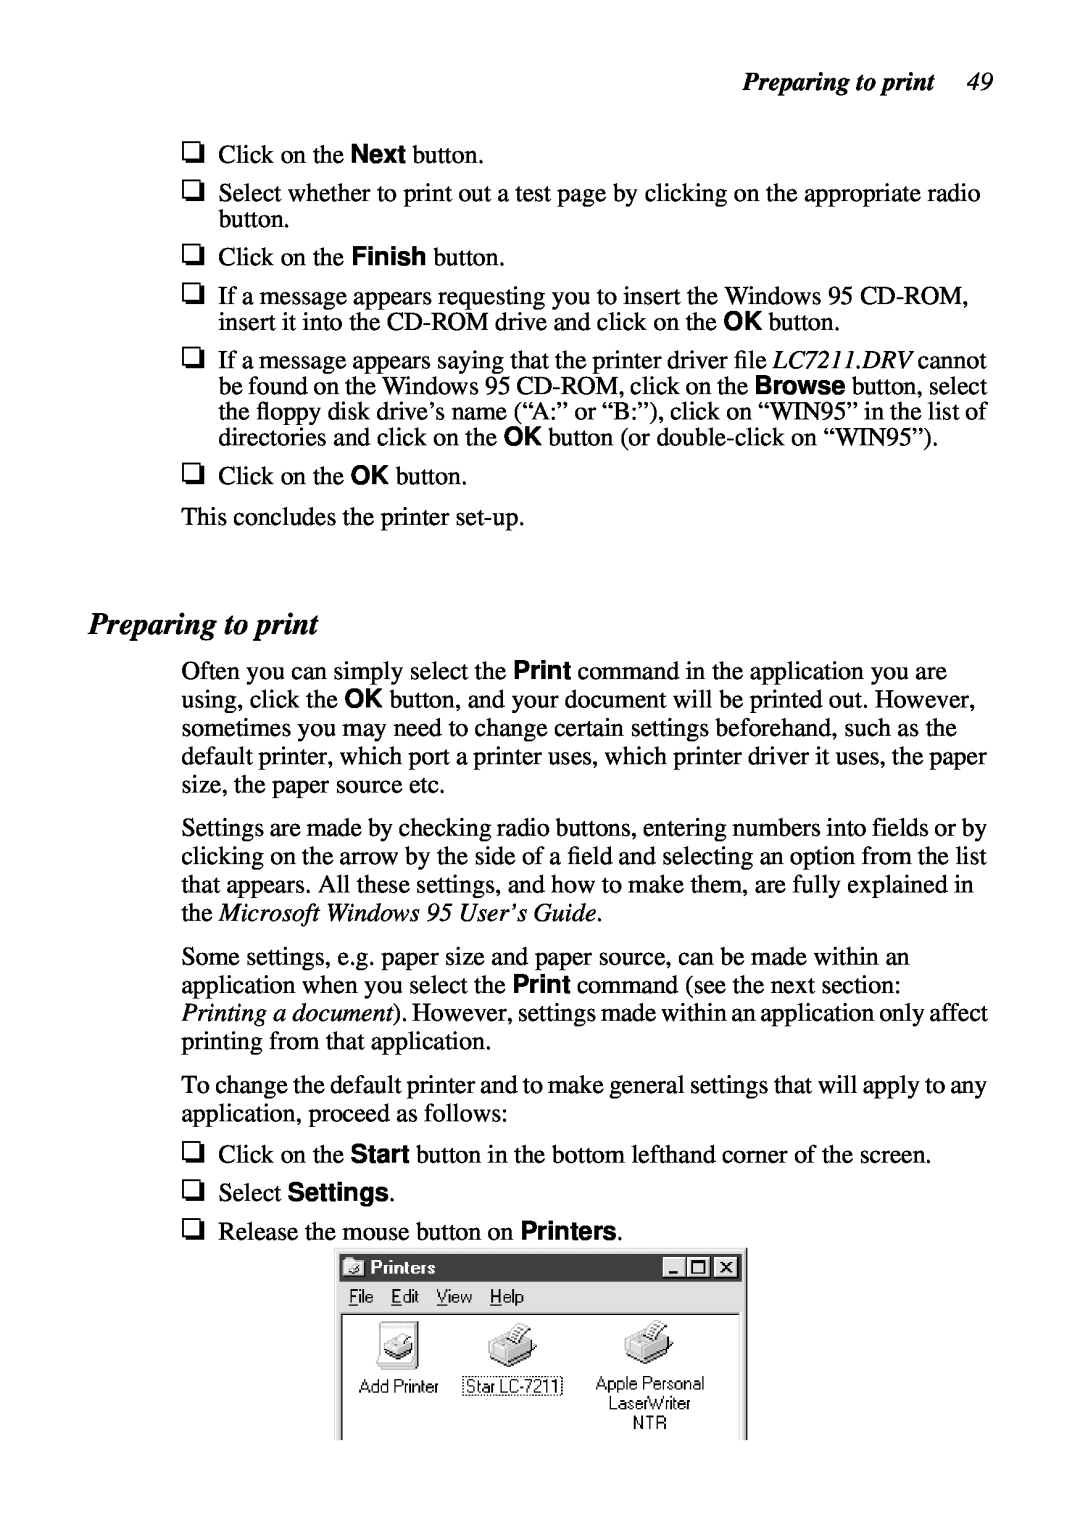 Star Micronics LC-7211 user manual Preparing to print, the Microsoft Windows 95 User’s Guide 